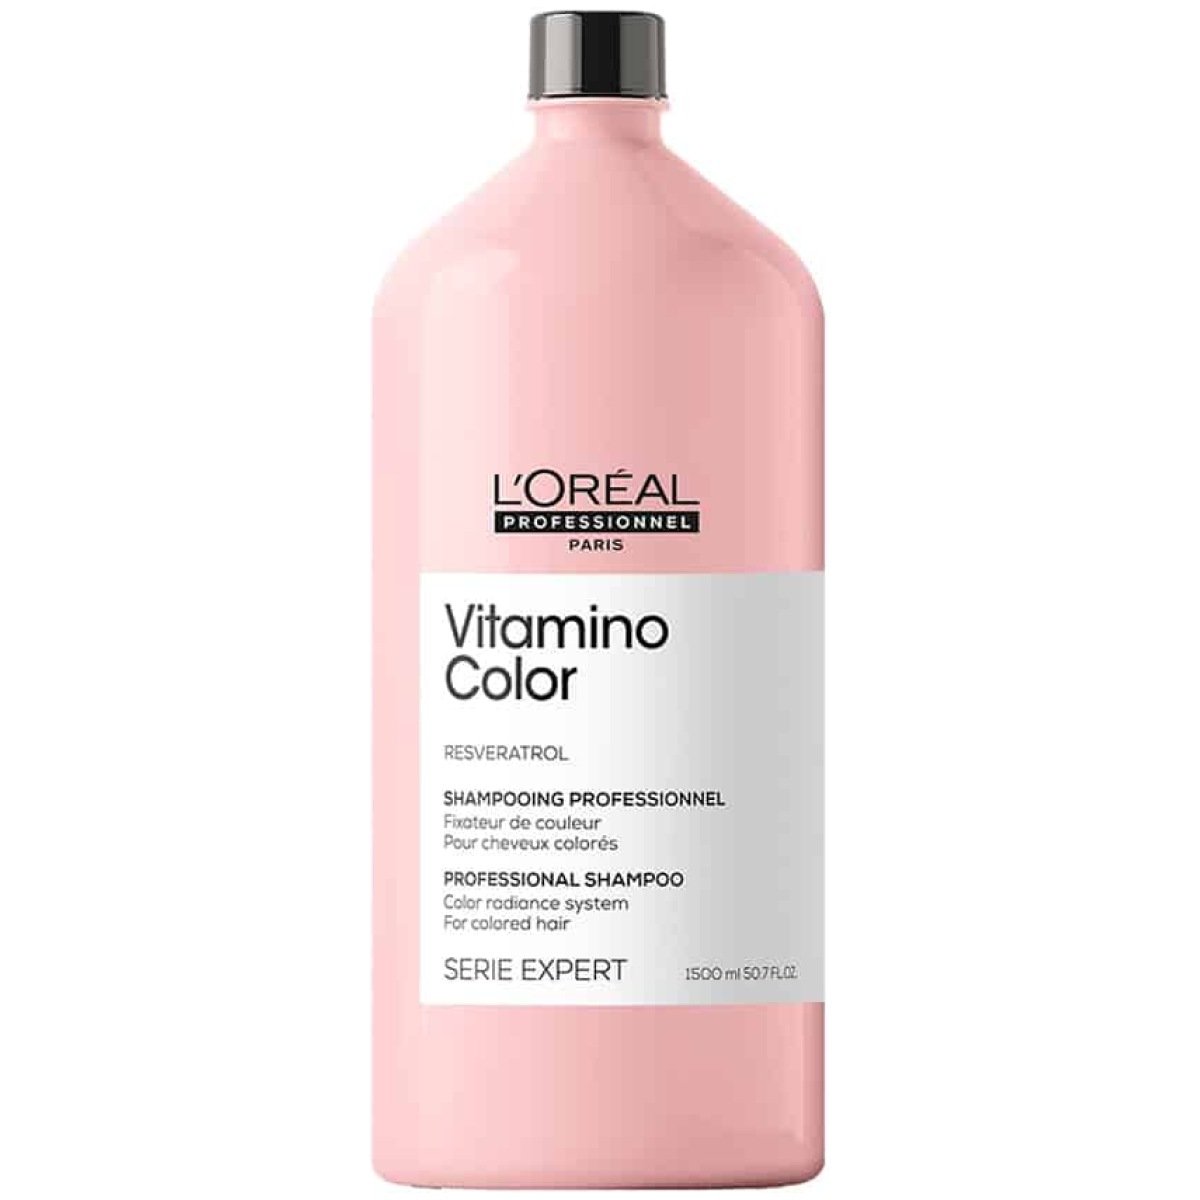 Loreal Professionnel Series Expert Resveratrol Vitamino Color Shampoo 1500ml